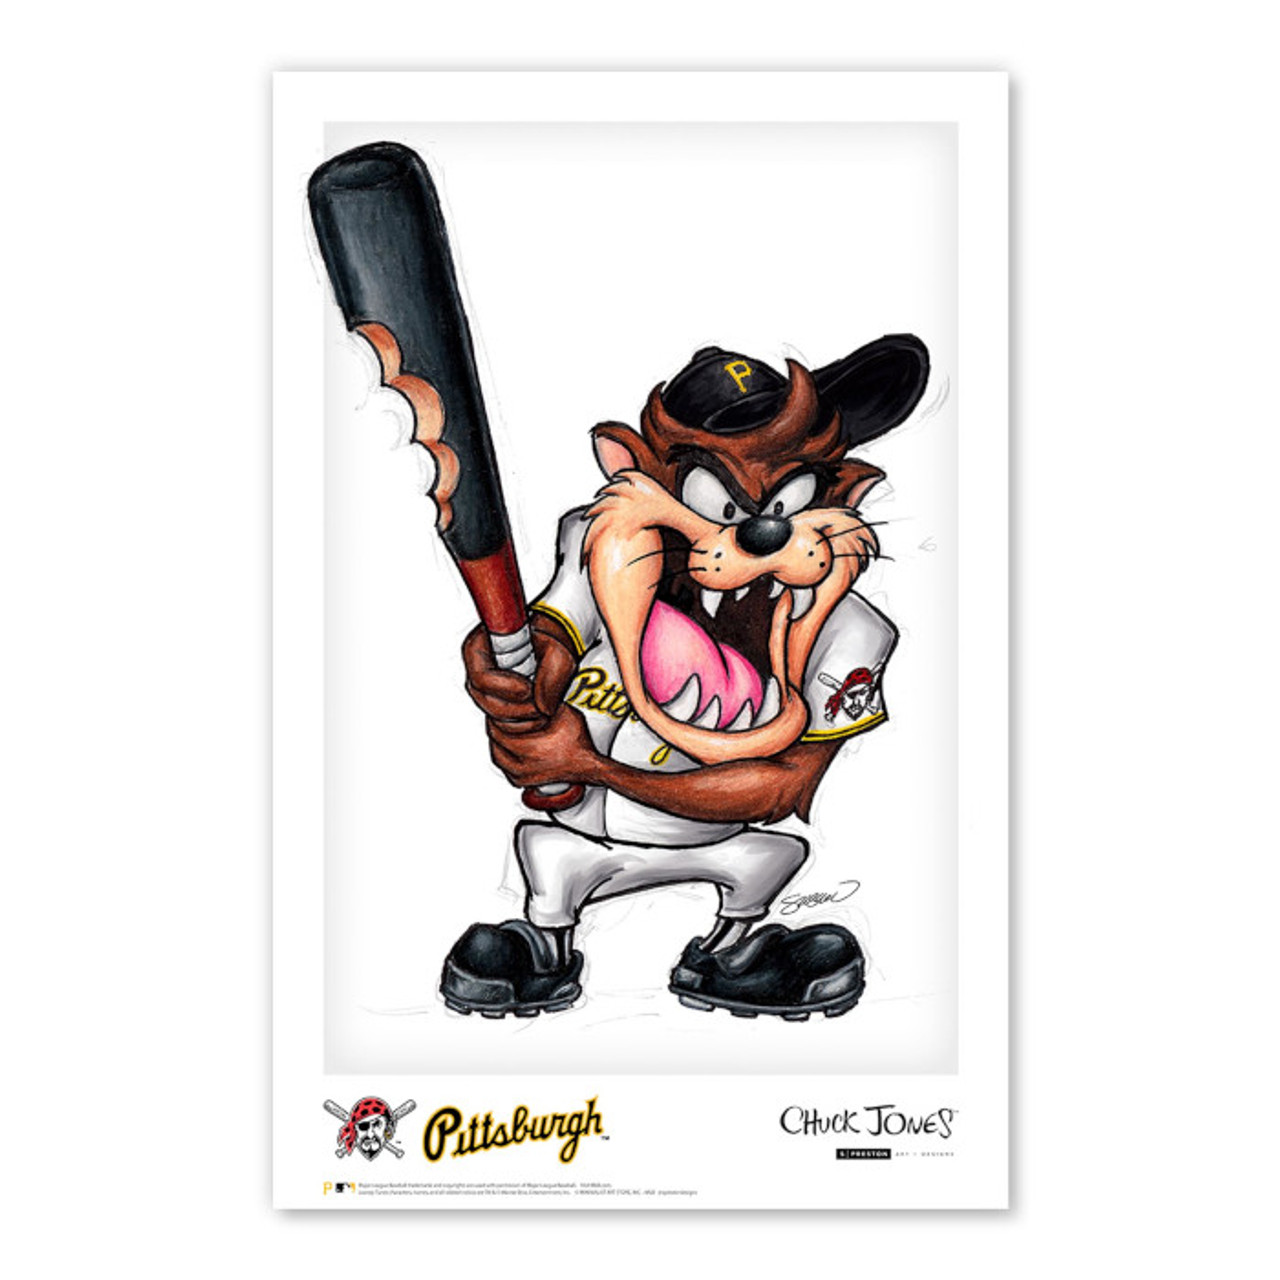 Great Baseball Player Juan Marichal Canvas Art Poster and Wall Art